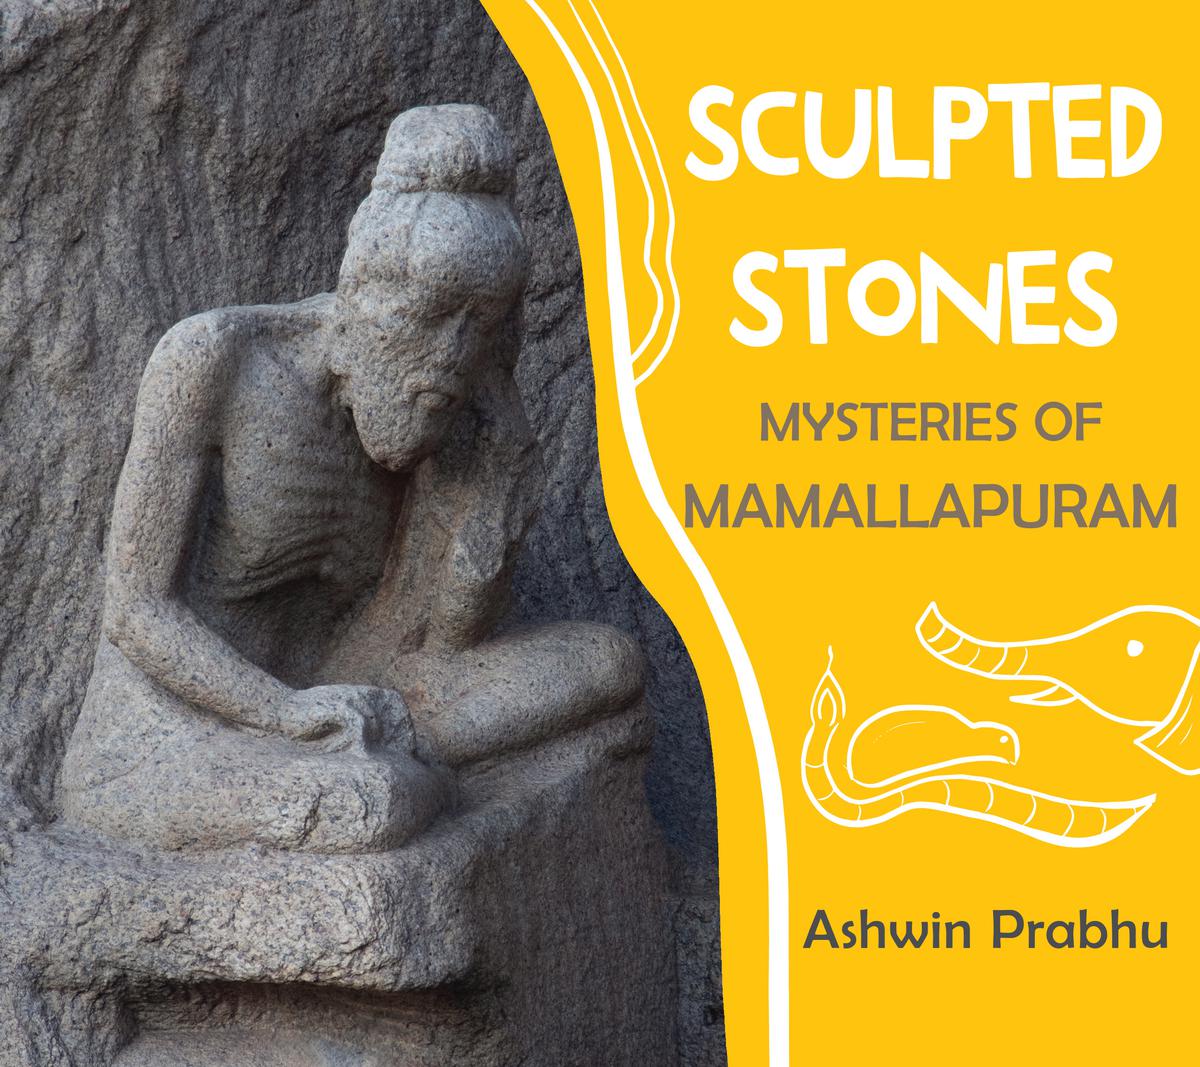 Sculpted Stones - Mysteries of Mamallapuram published by Tulika Books